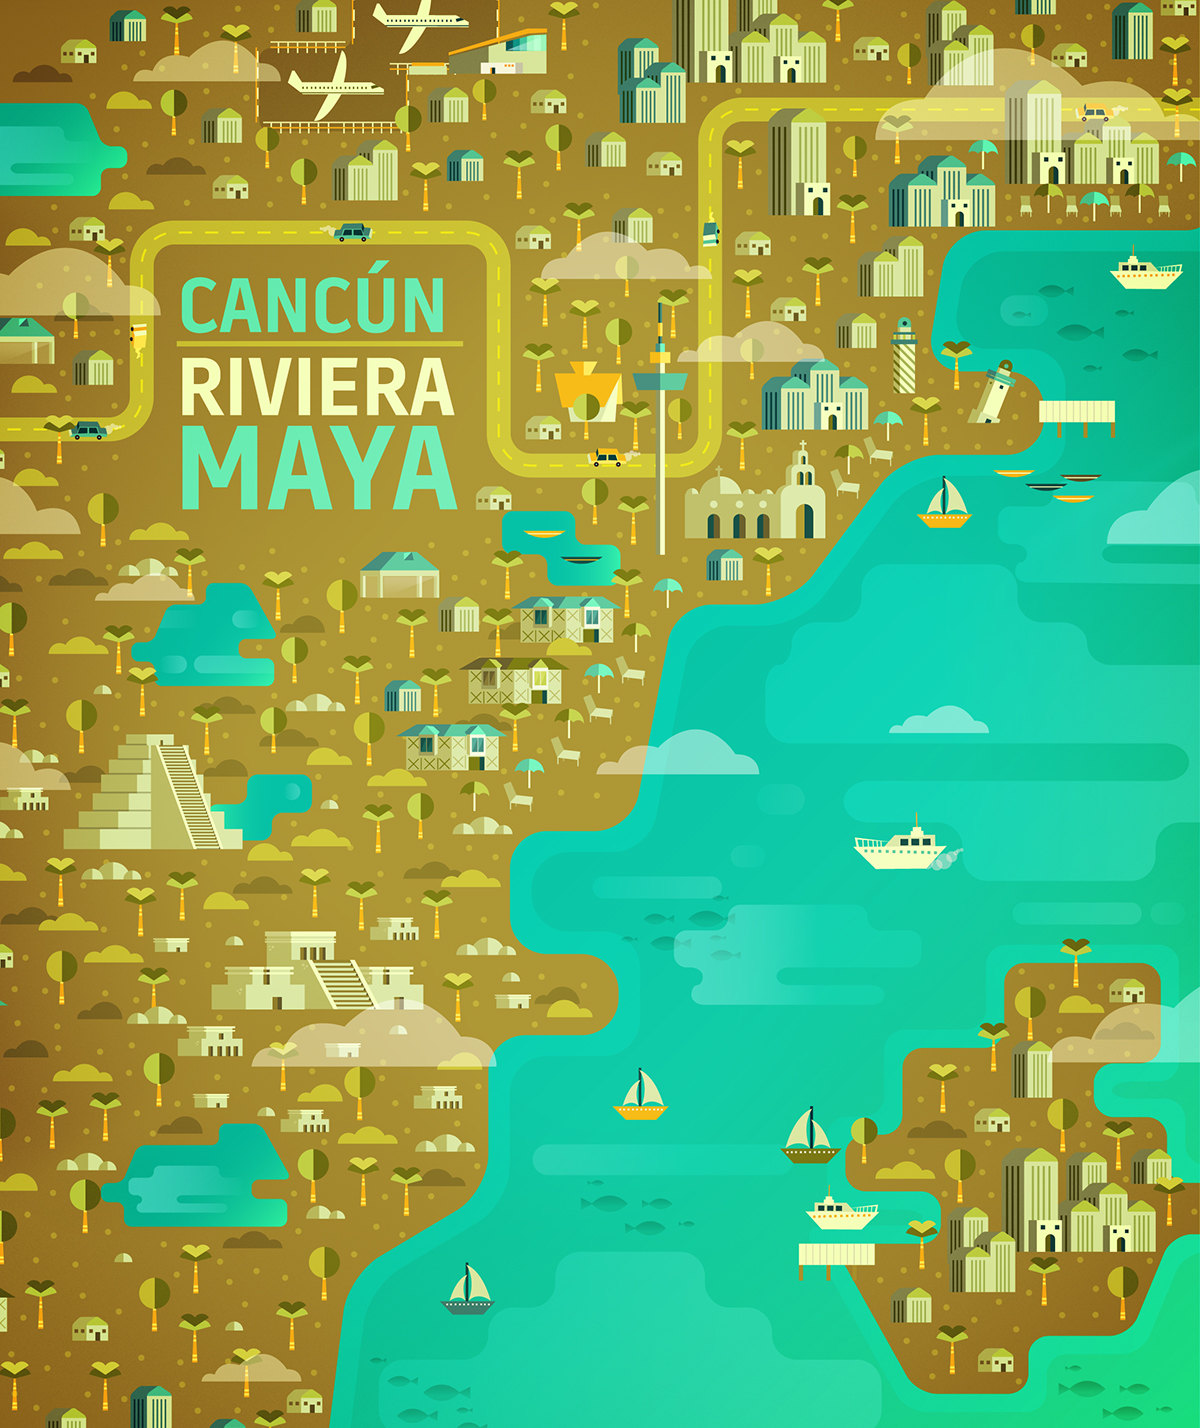 city Cities world maps map vector Tanzania mexico city vienna Banff cancun Riviera Maya tokyo buildings tourism